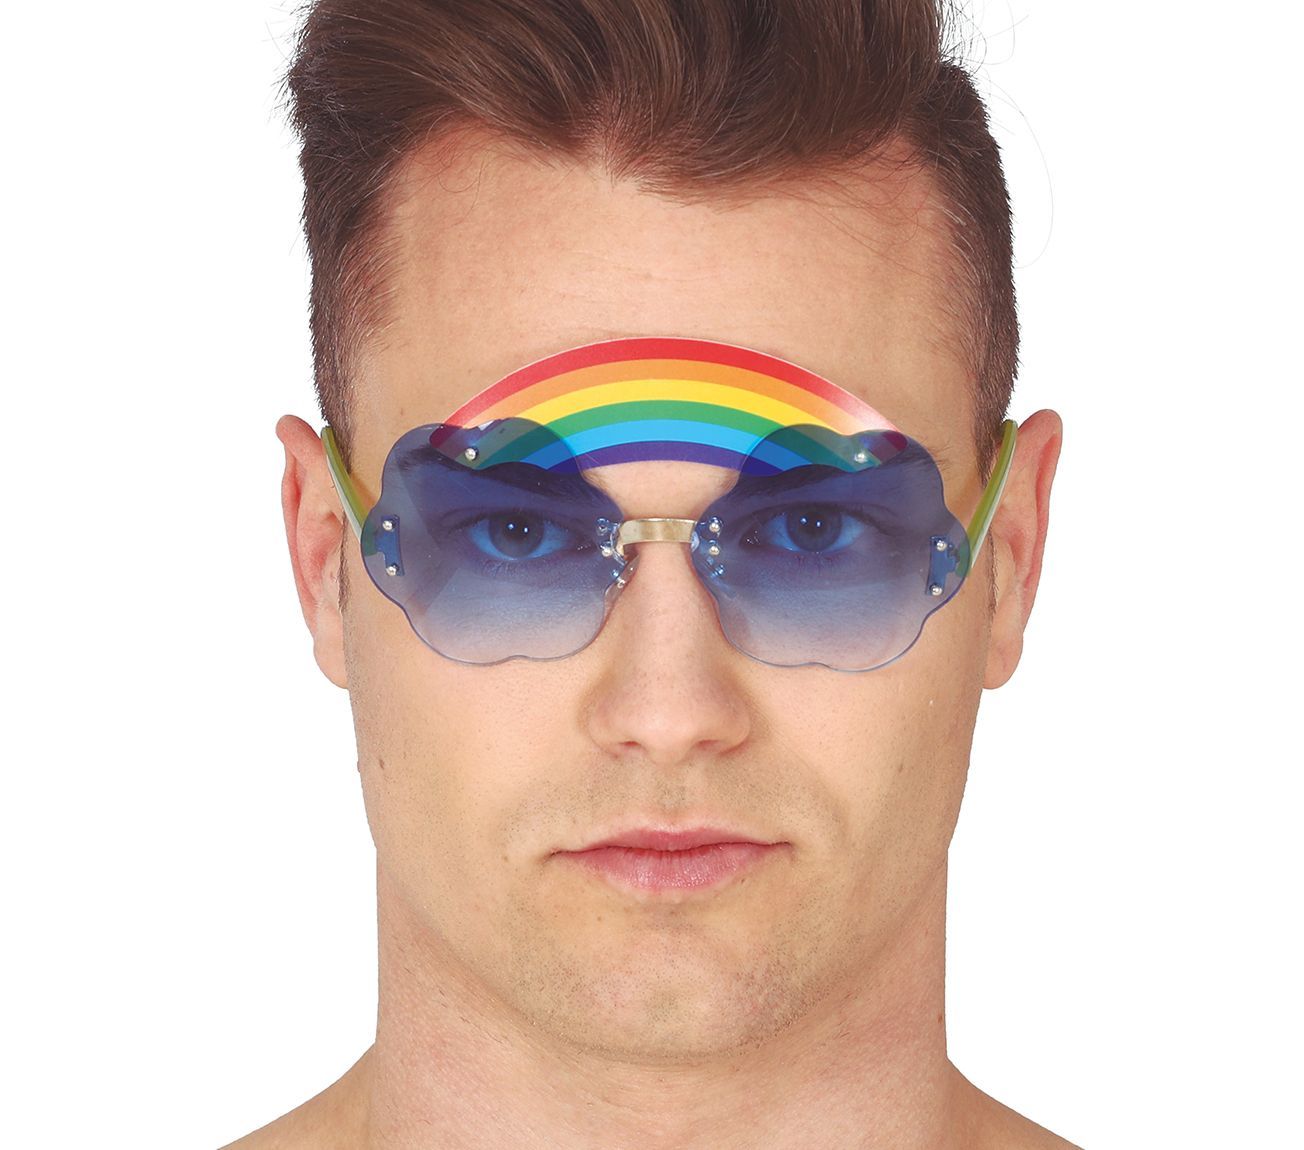 Blauwe bril met regenboog